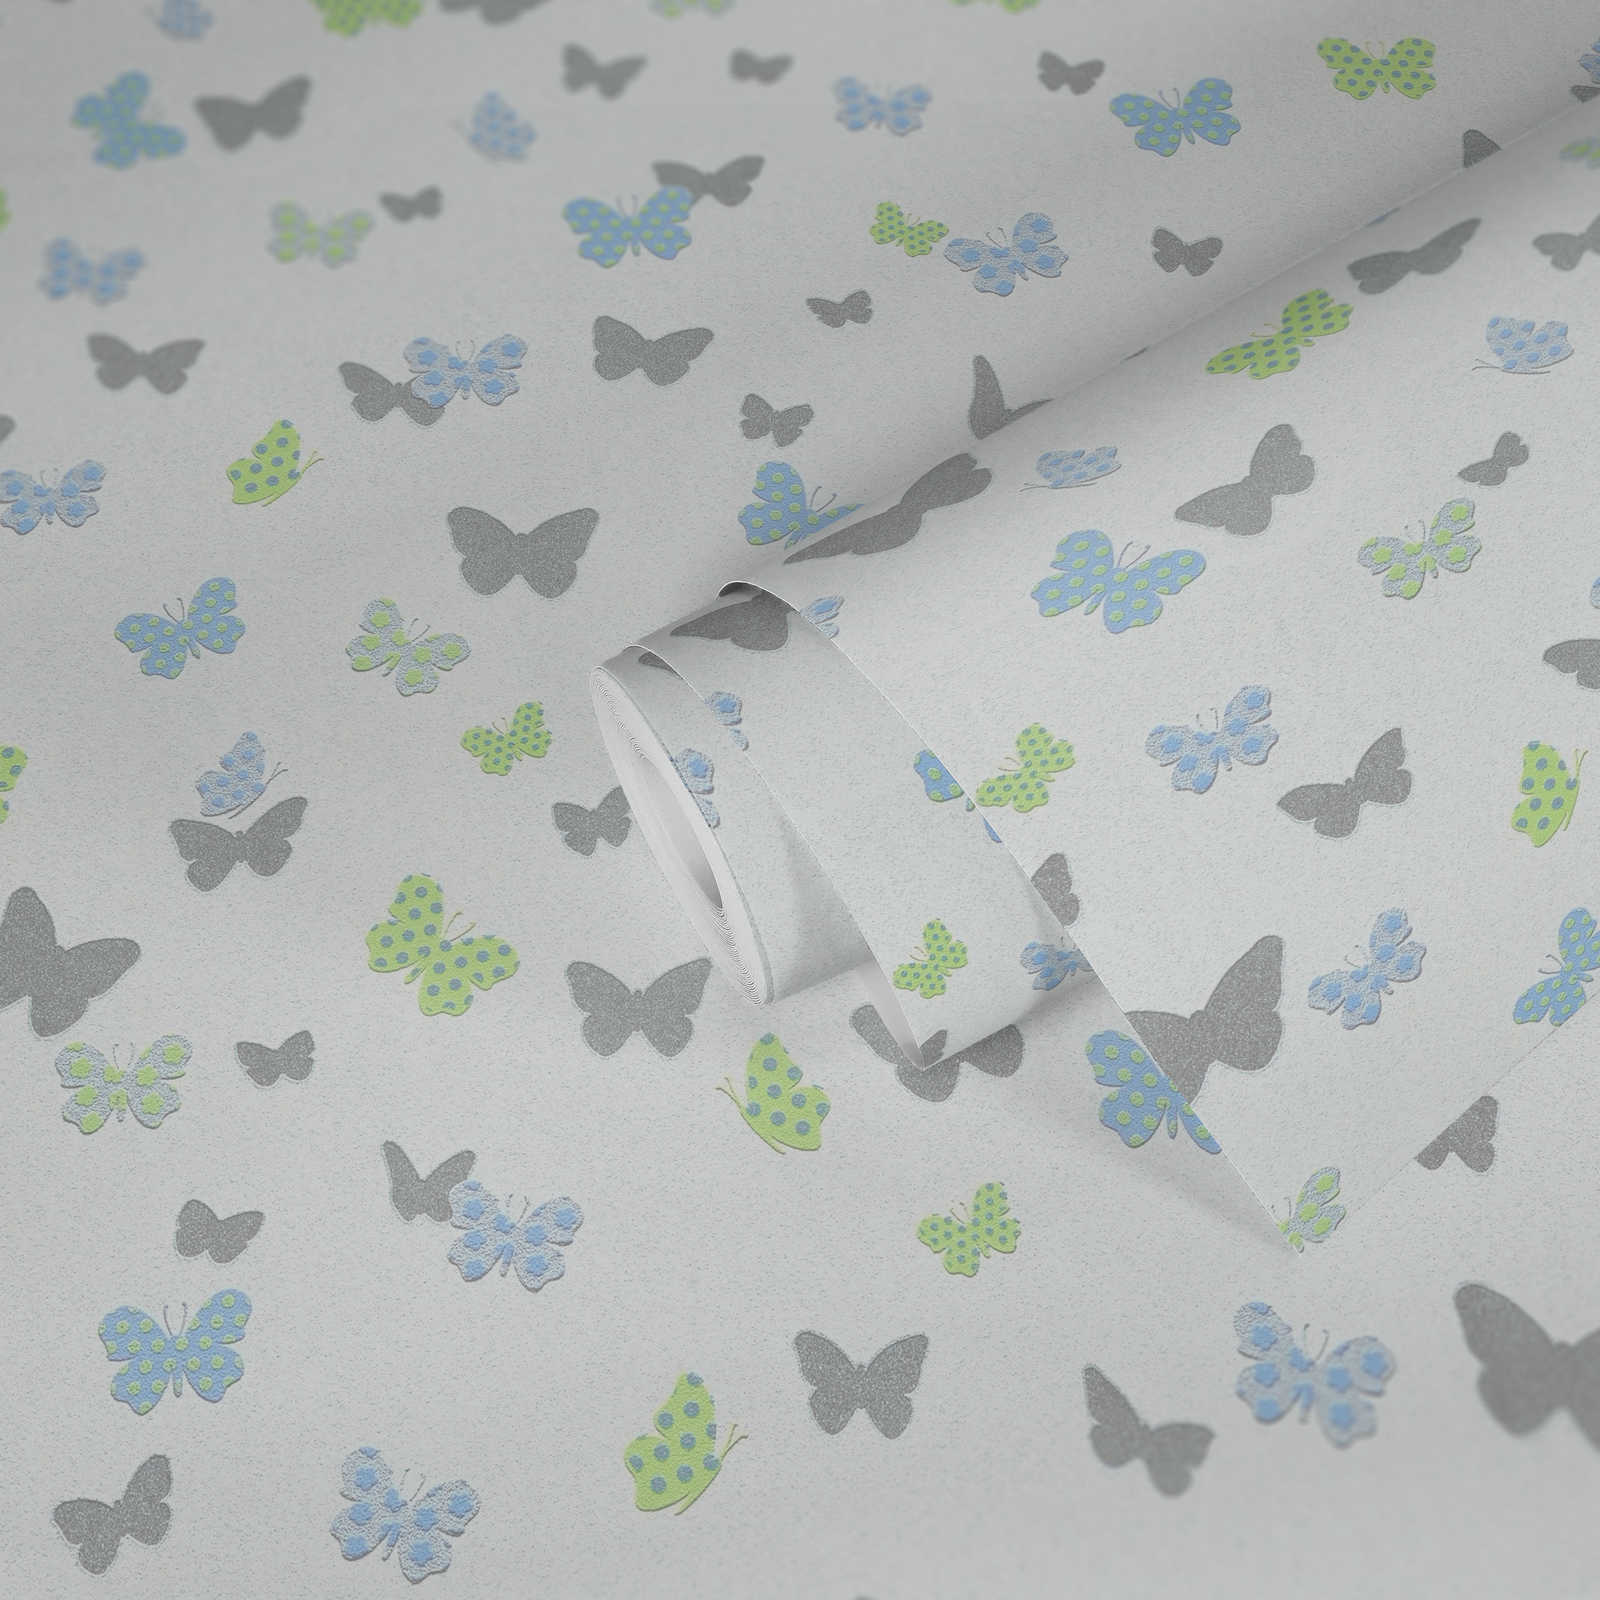             Carta da parati a farfalla per camerette per ragazzi - bianco, blu, grigio
        